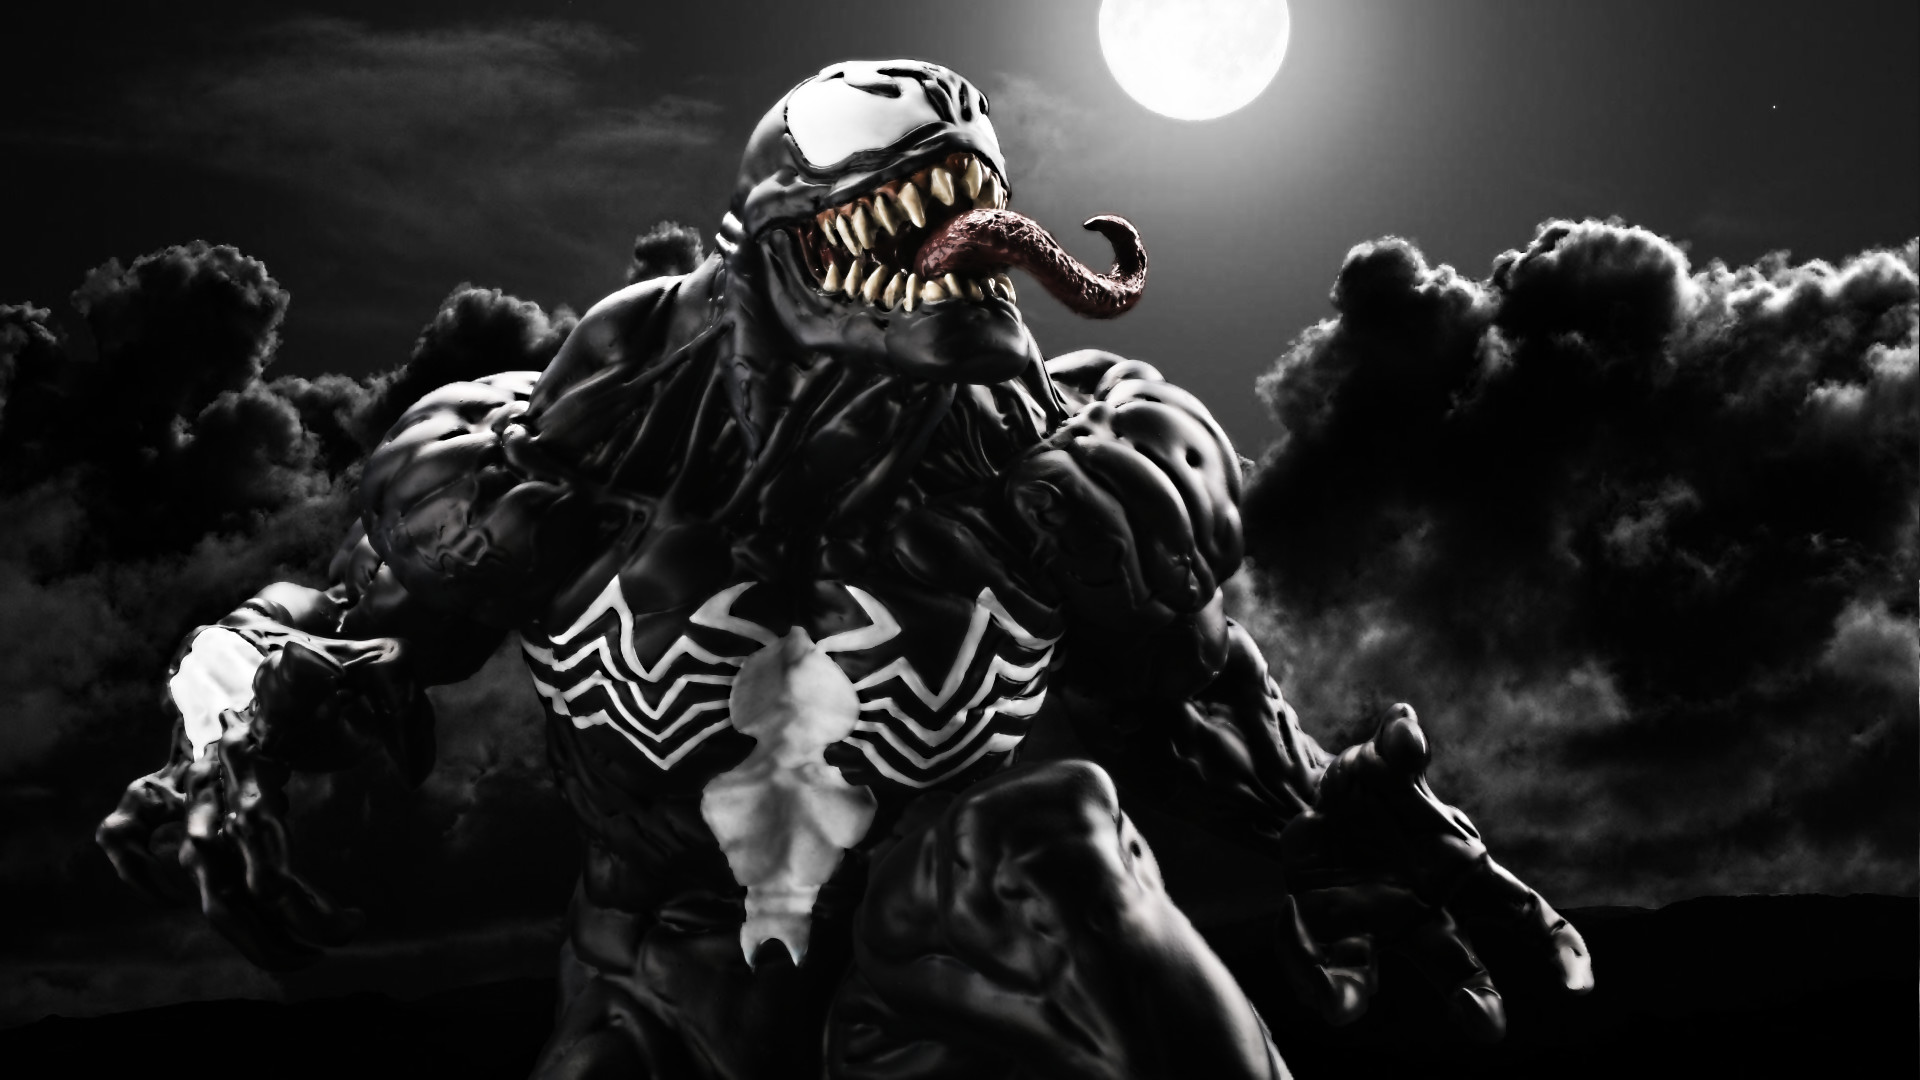 1920x1080 Spider Man Vs Venom HD Wallpaper Source Â· Venom Wallpapers WallpaperSafari